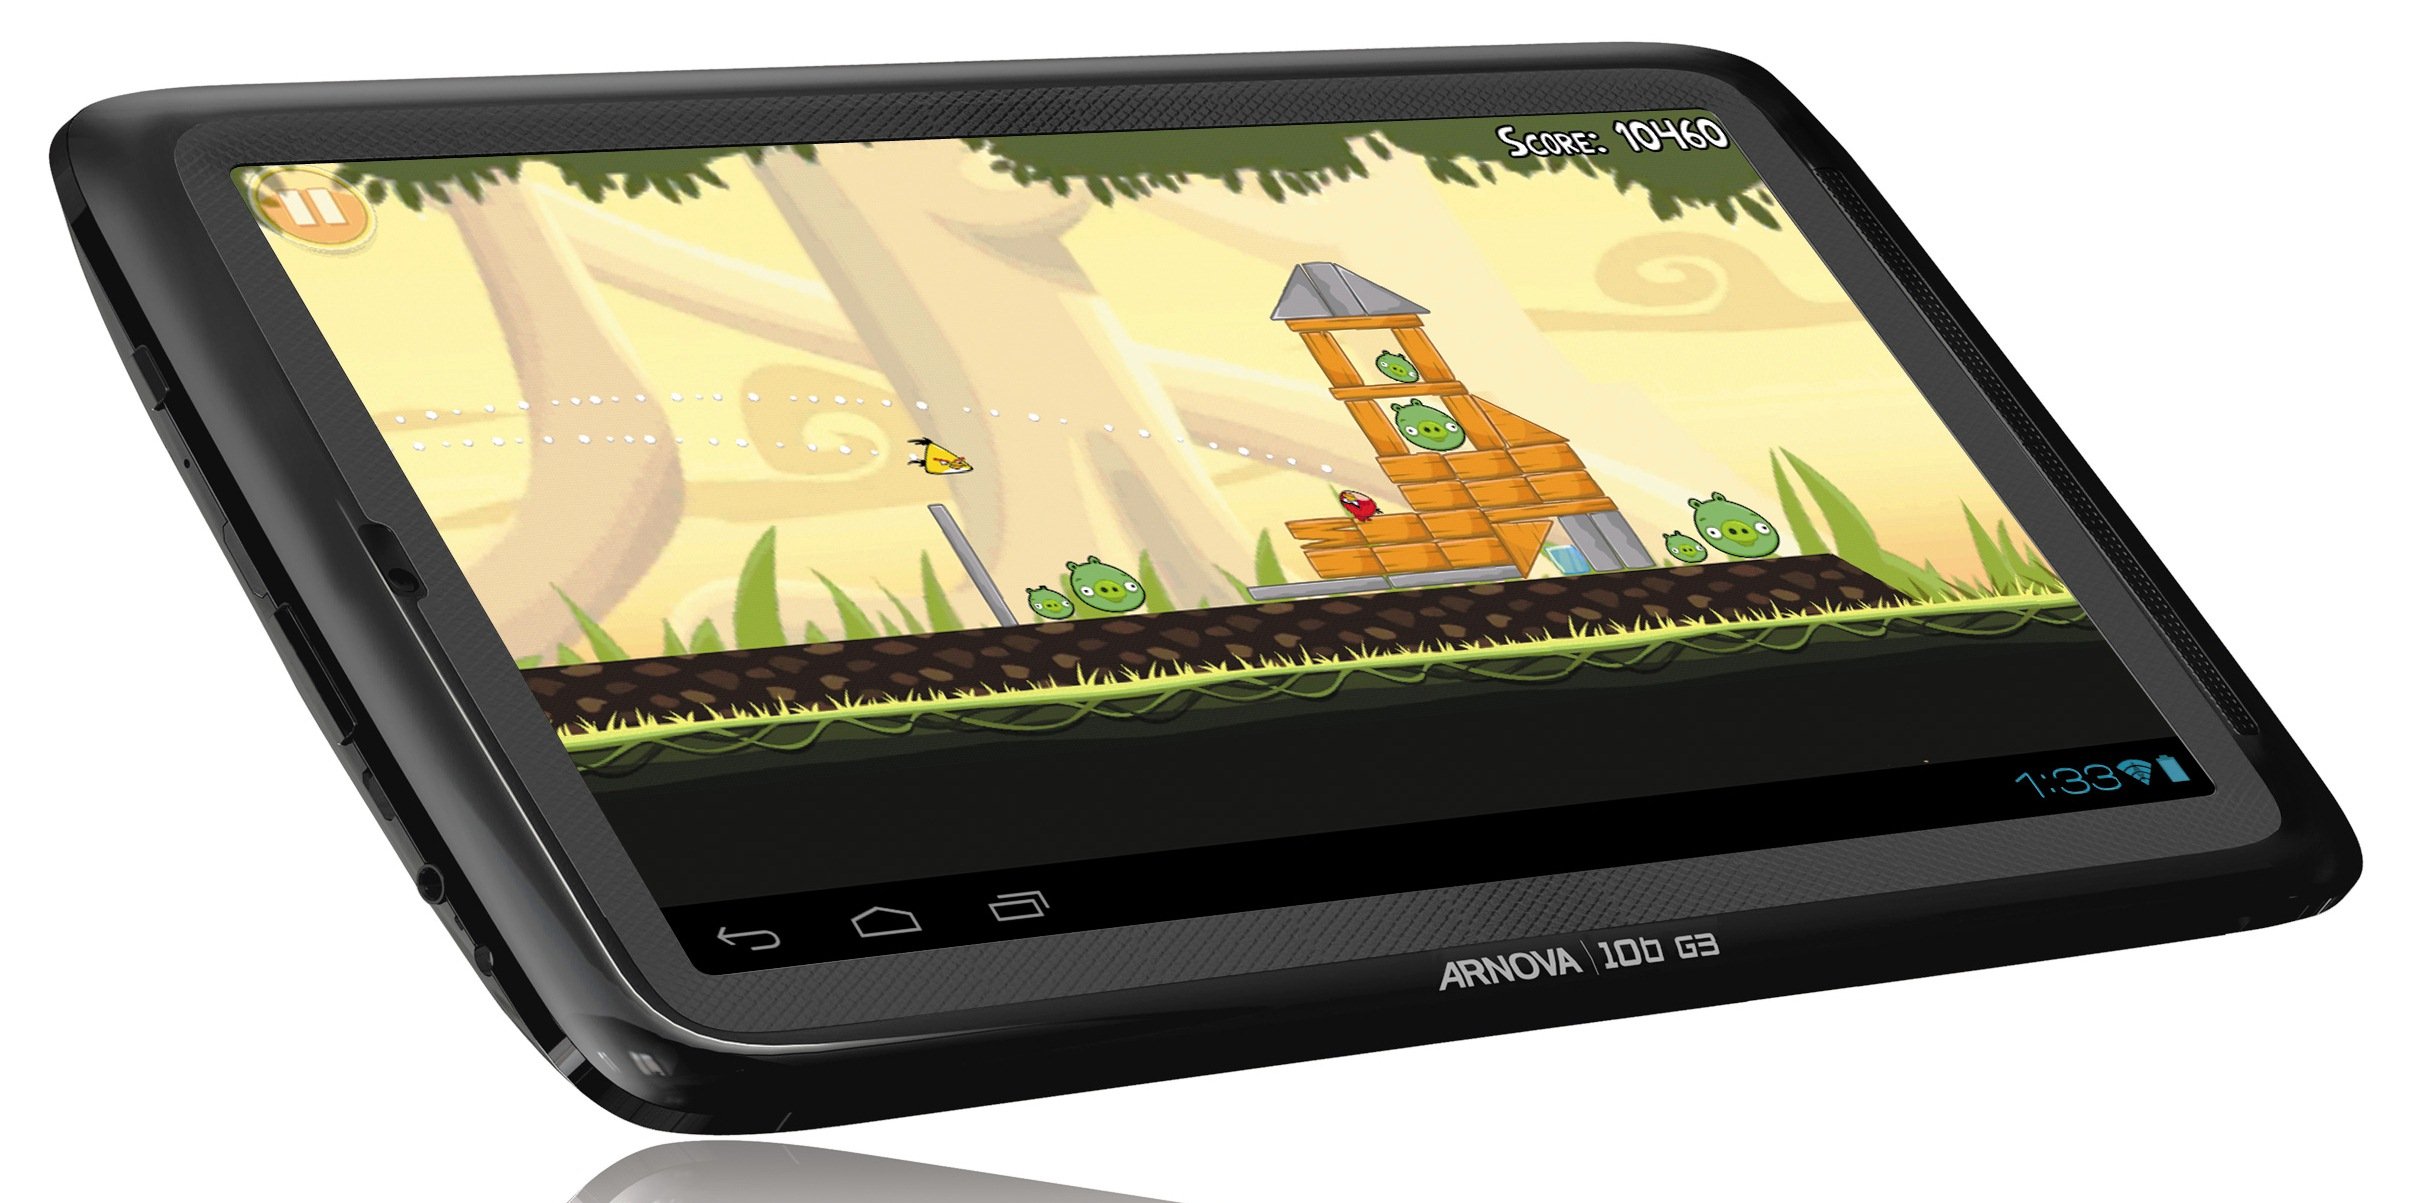 ARNOVA 10b G3 4GB 10-Inch ICS Tablet (Black)